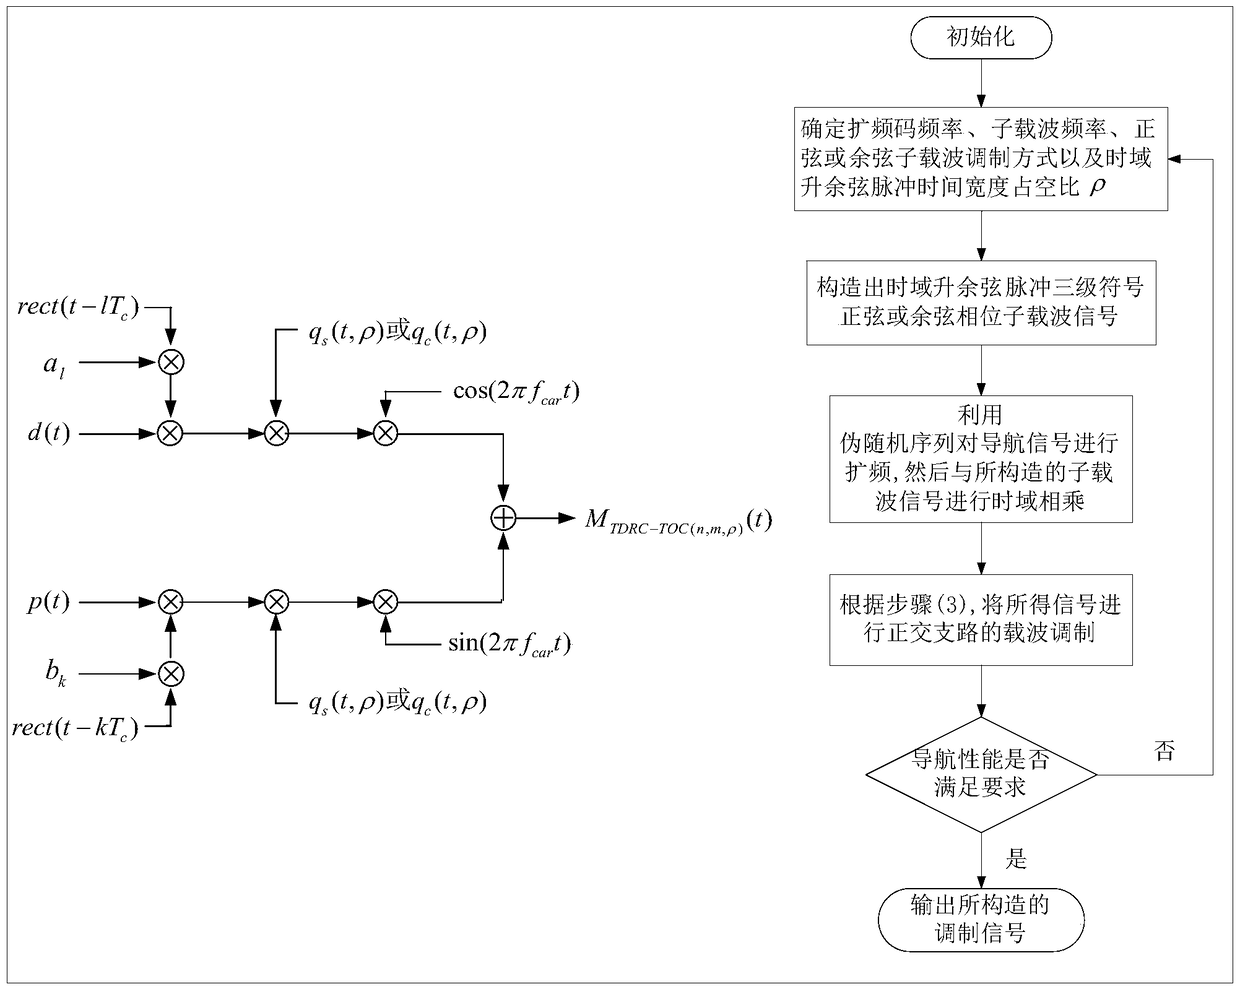 A Three-level Symbol Offset Carrier Modulation Method Based on Time-Domain Raised Cosine Pulse